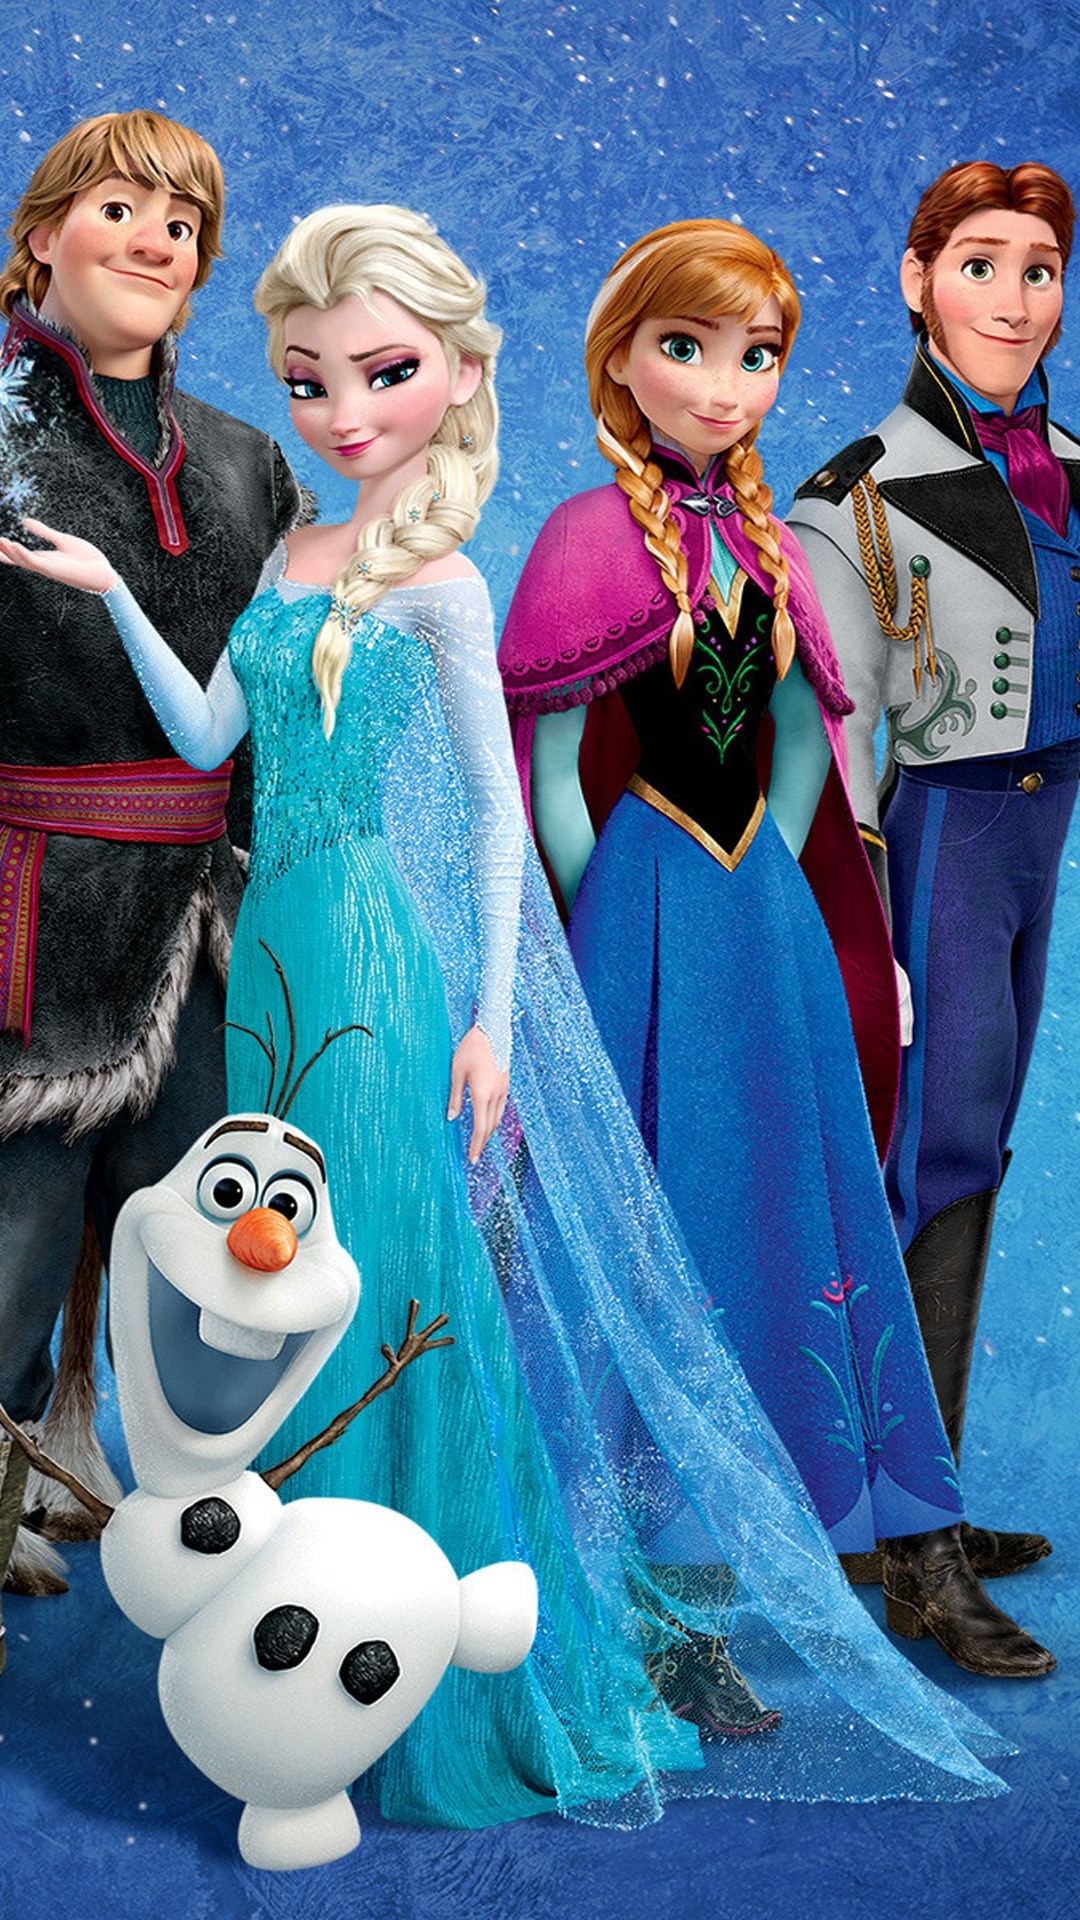 1080x1920 Frozen iPhone 6 plus wallpaper -2014 Christmas Disney Anna Elsa Kristoff  Hans Olaf #2014